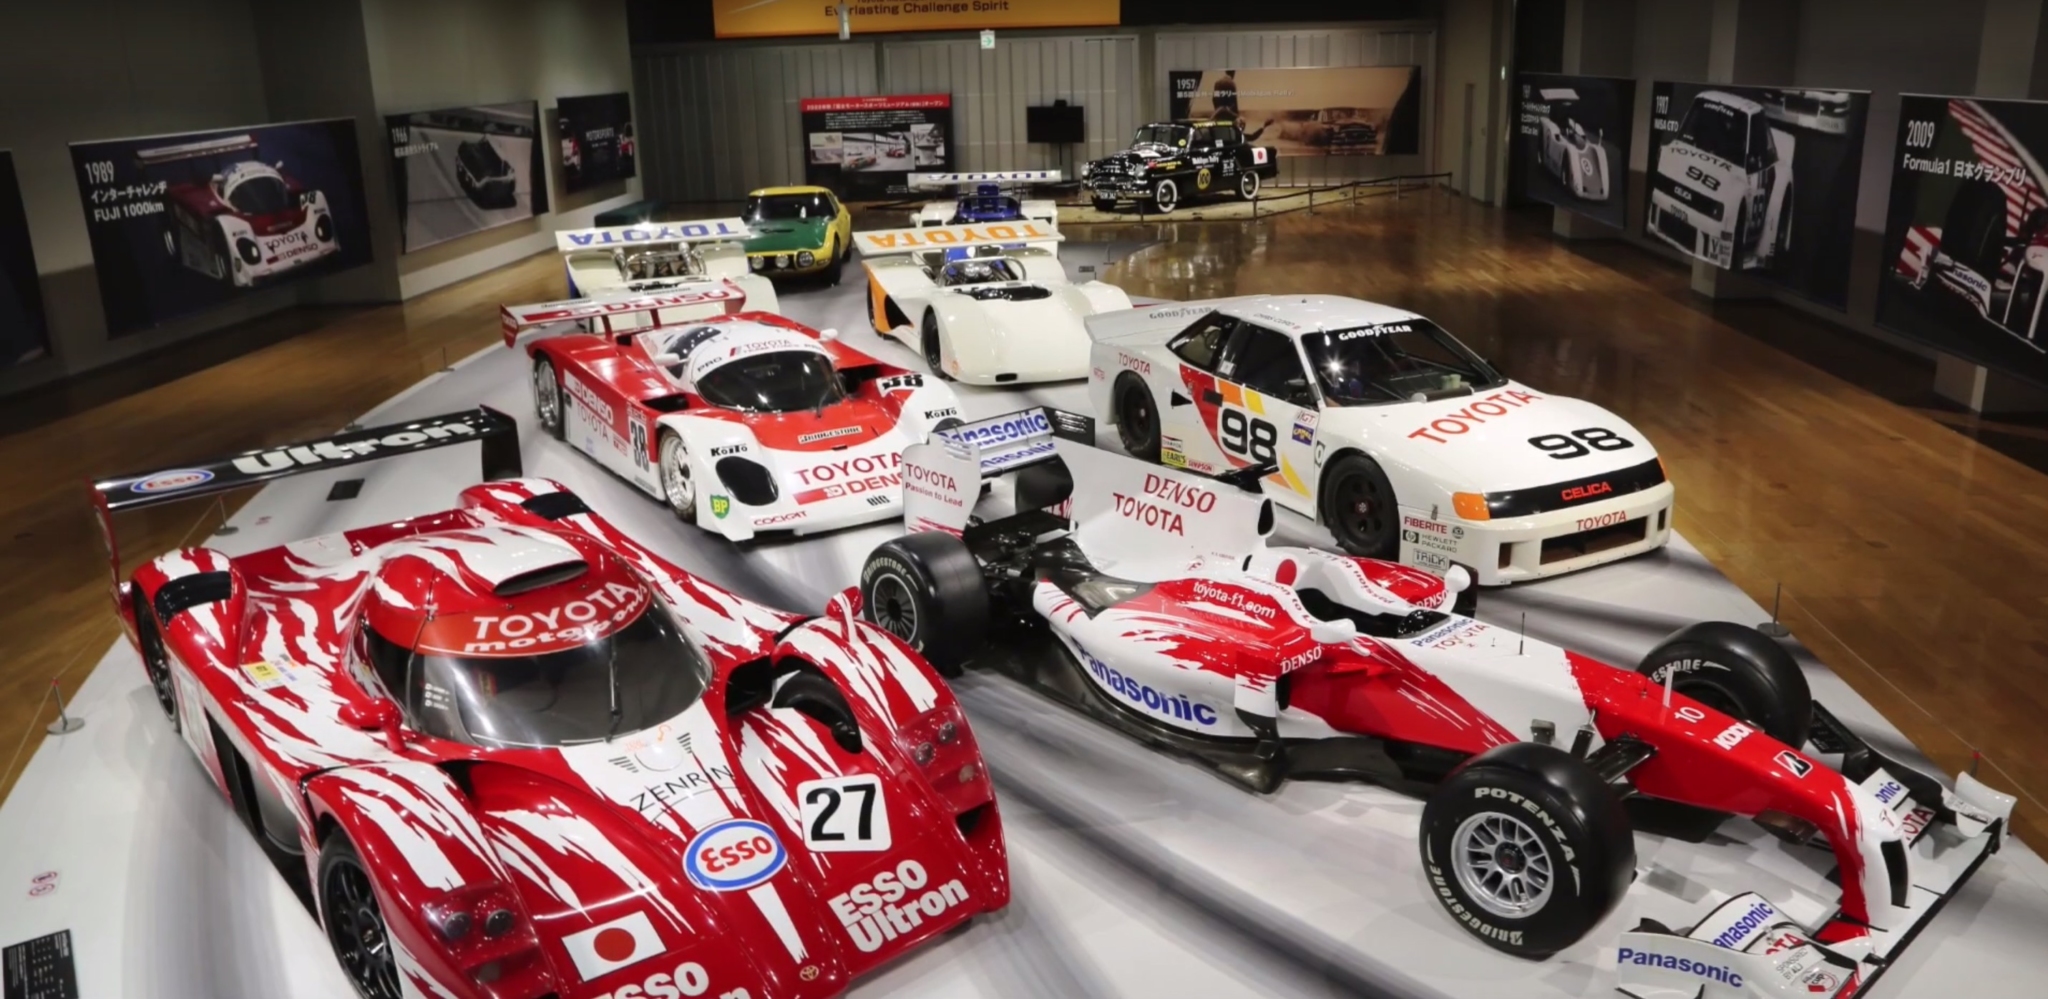 VIDEO A virtual tour of Toyota’s Motorsports Biography exhibit